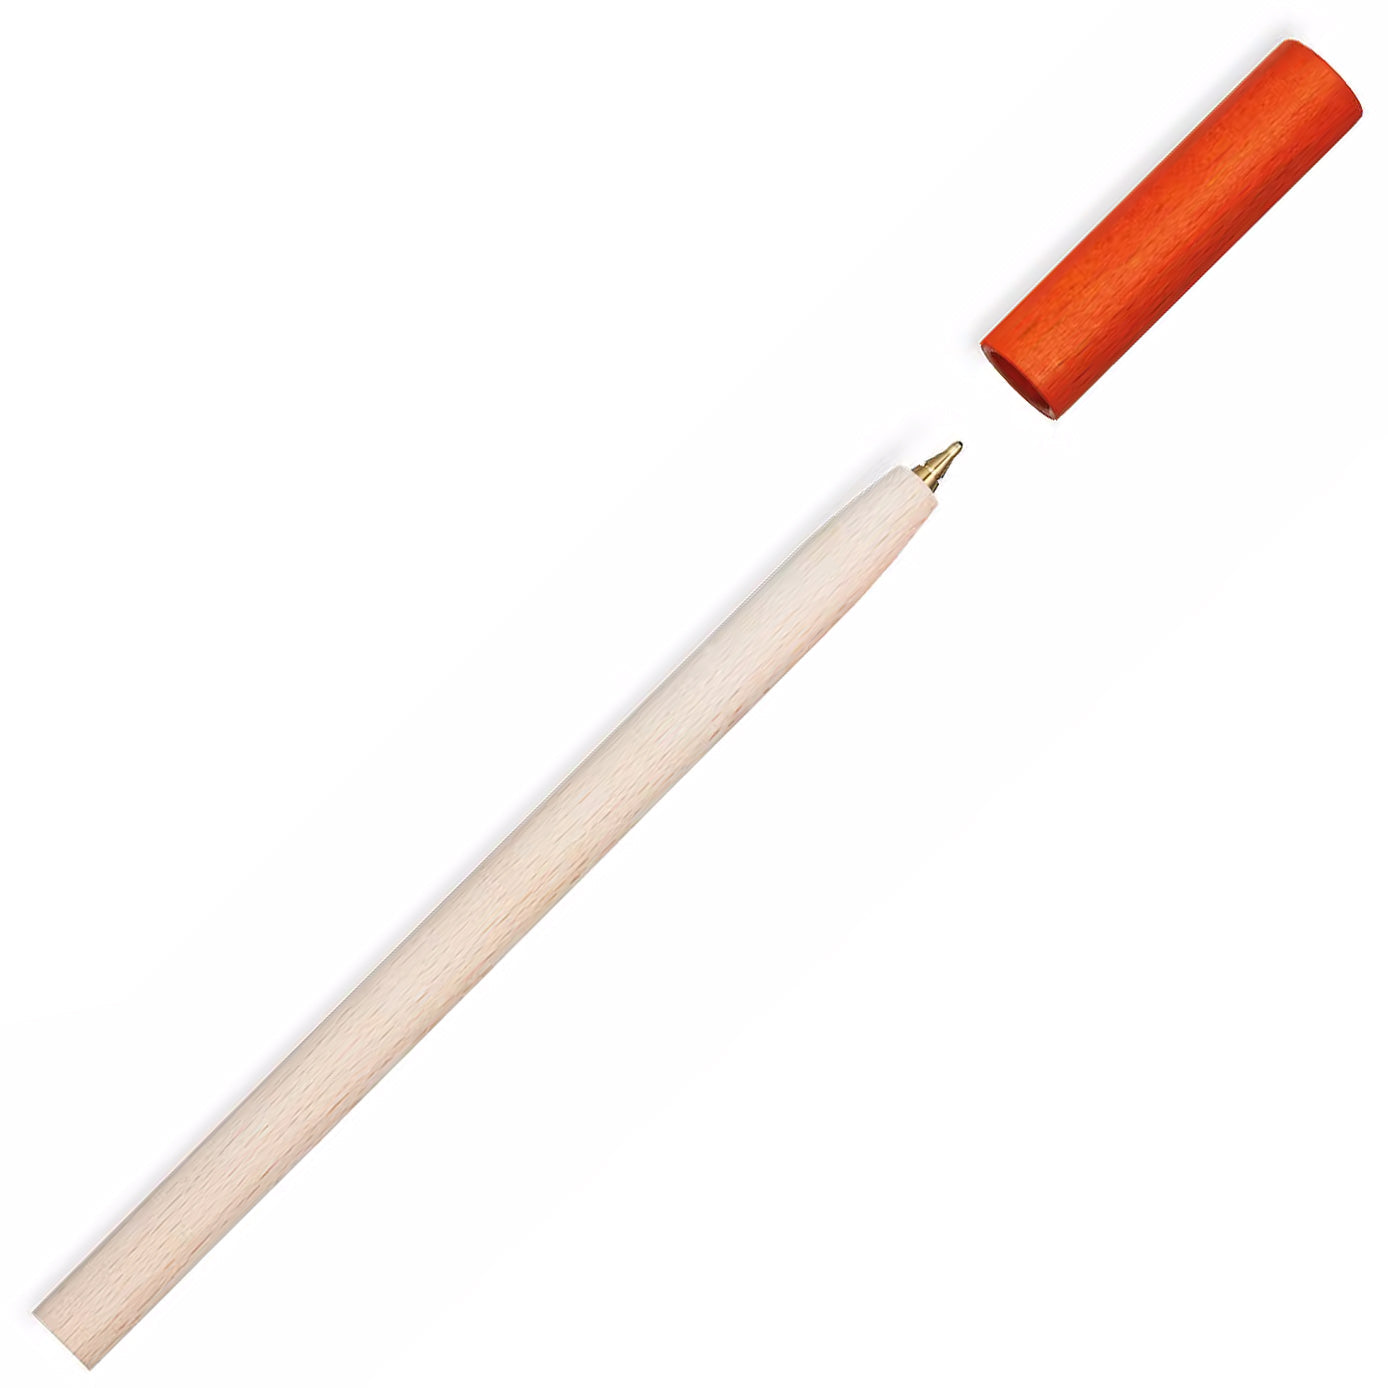 e+m Holzprodukte Cap Wood Ballpoint Pen orange cap off | Made in Germany